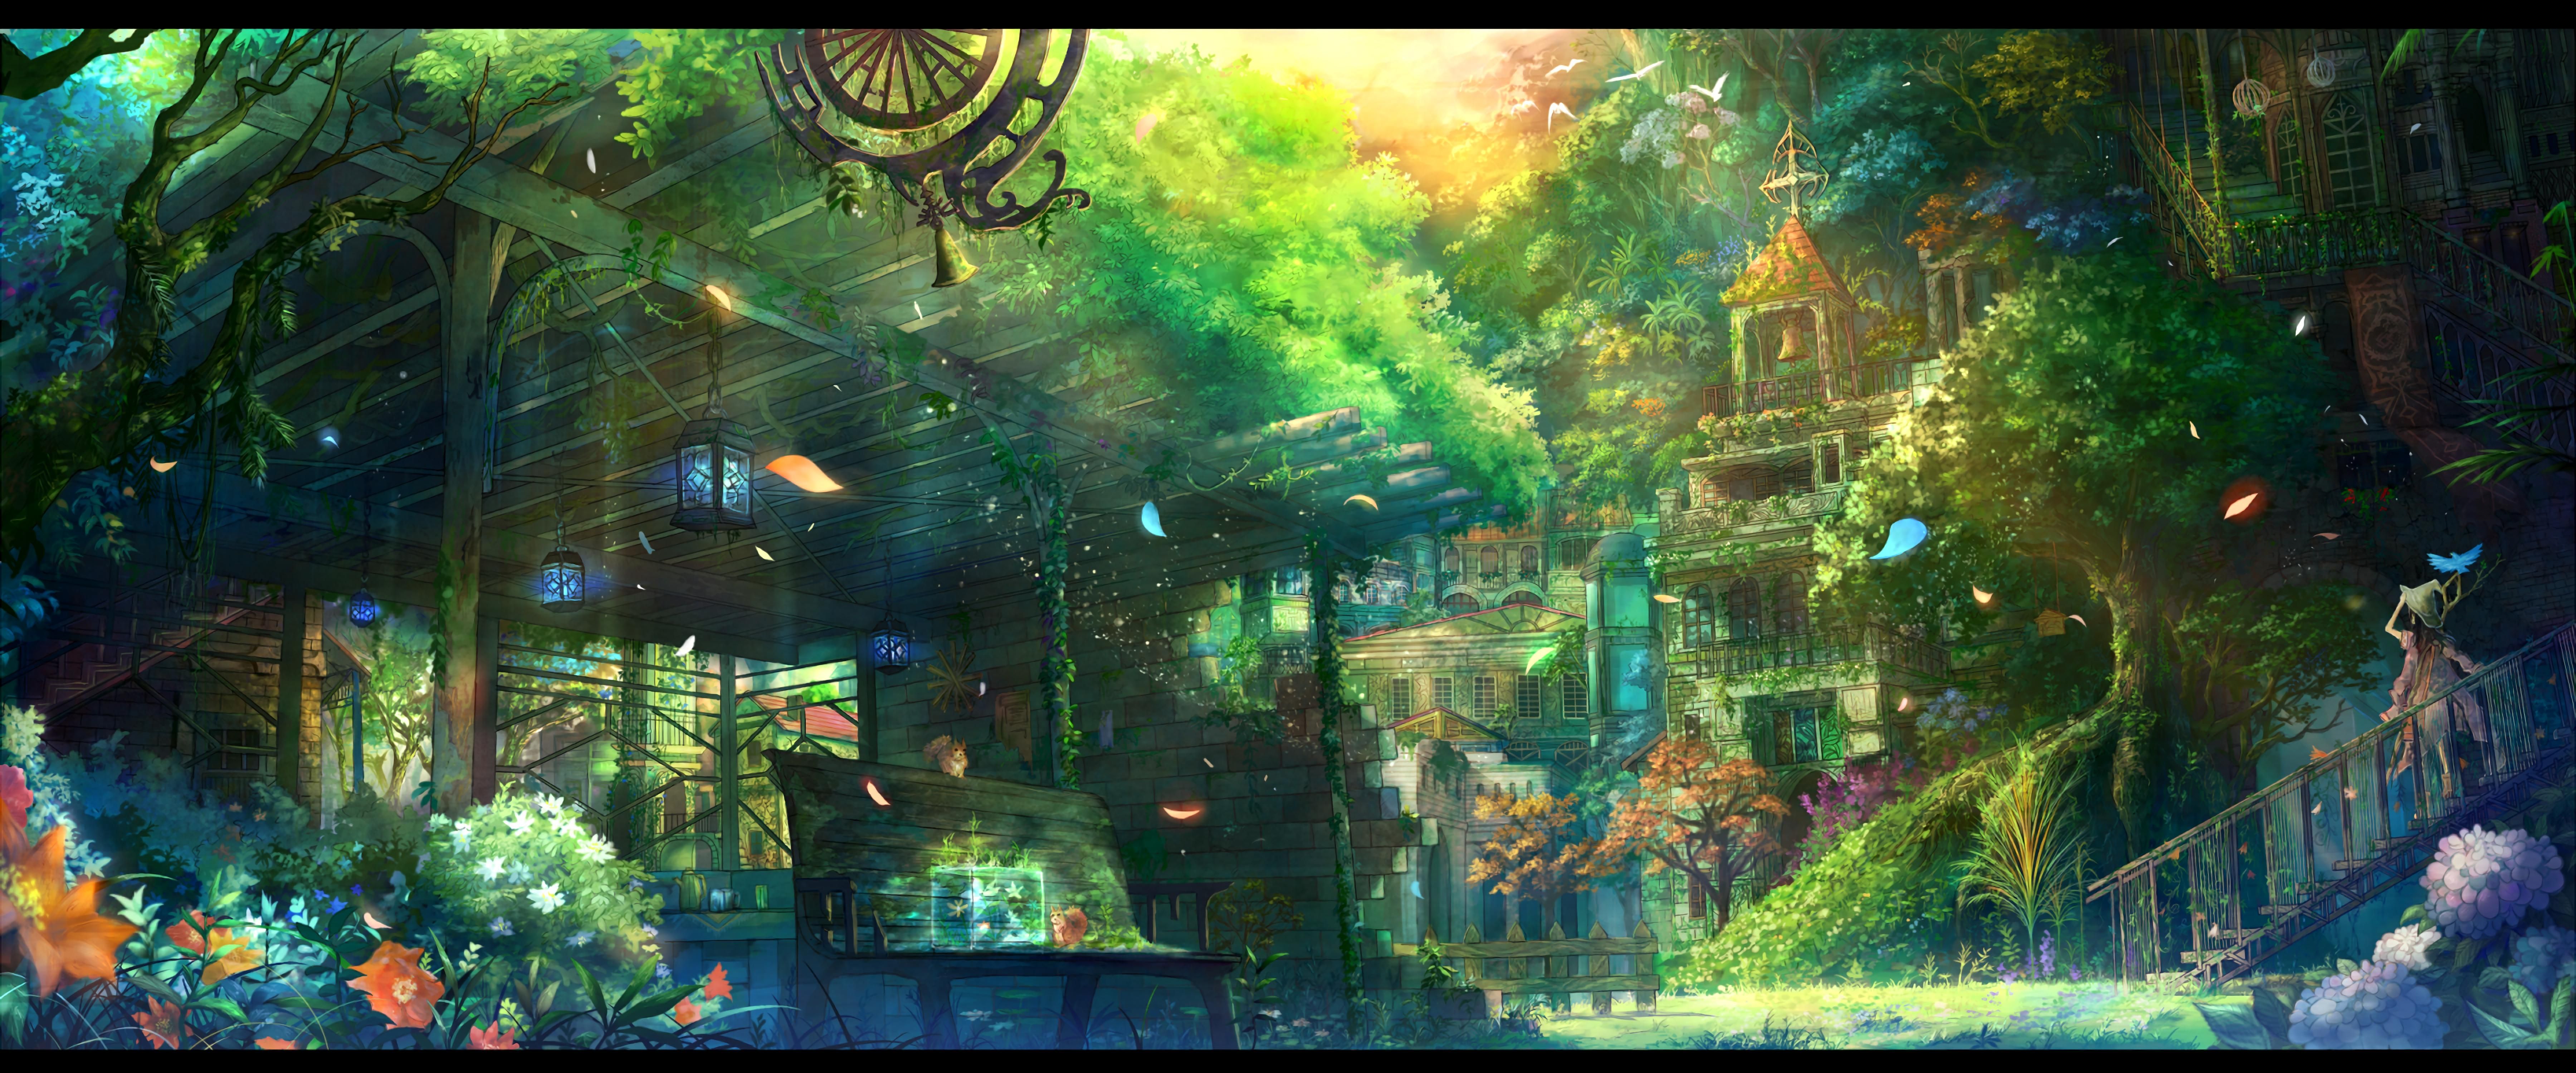 Anime scenery wallpaper, Scenery .com